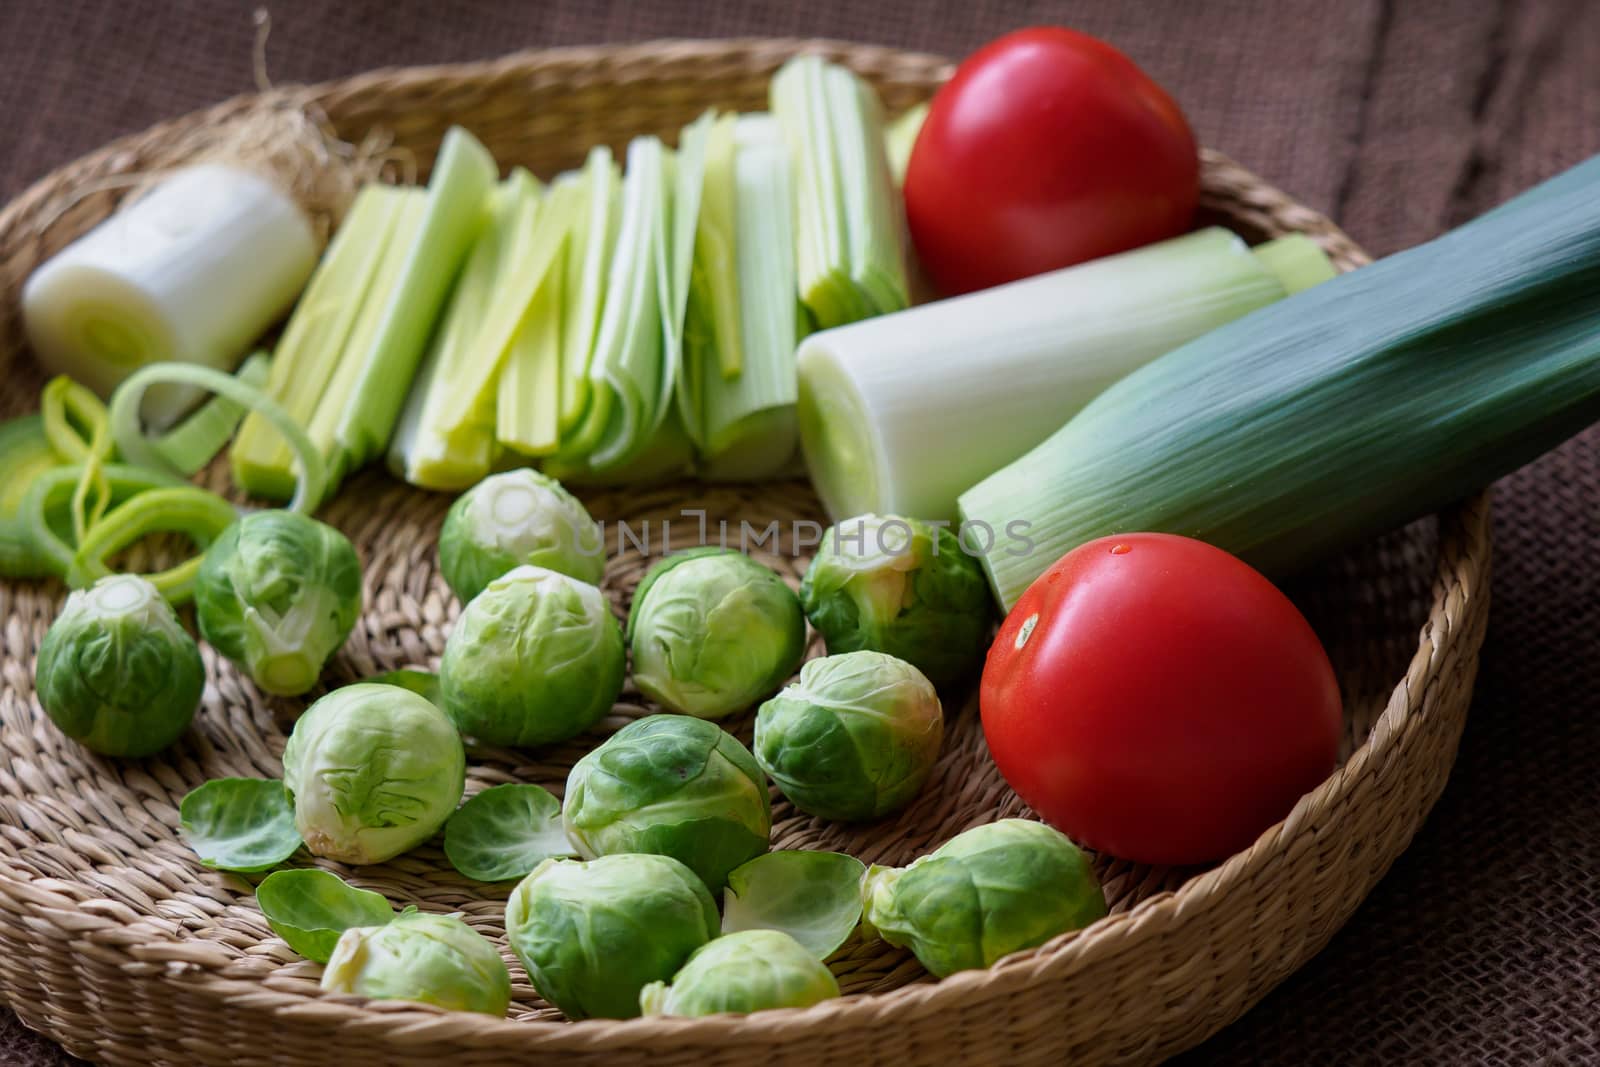 Brussels sprouts (Brassica oleracea) tomato, leek in a basket by xtrekx